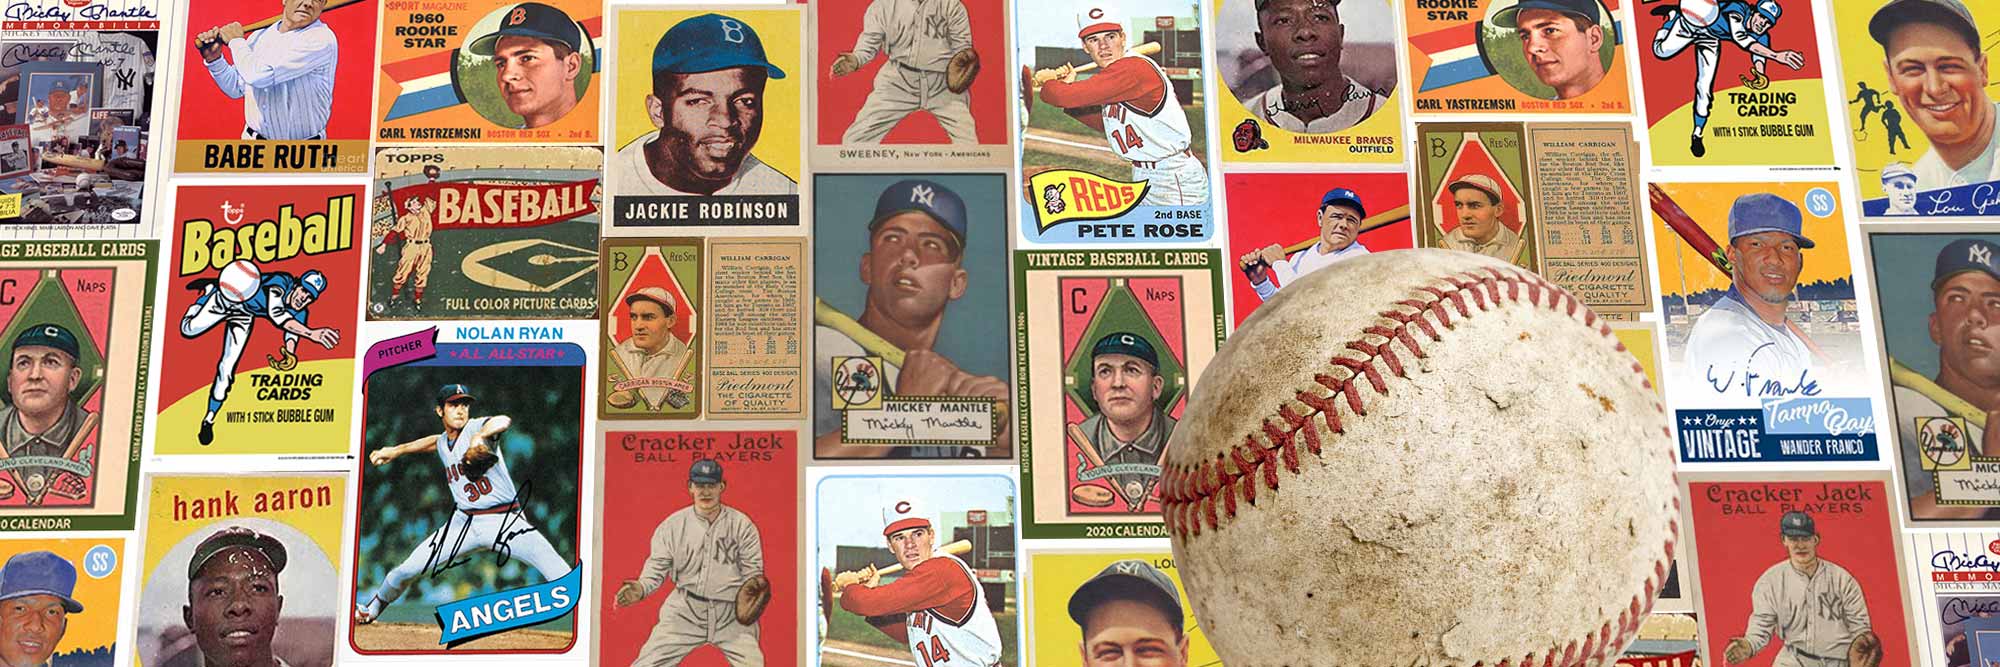 St. Louis Cardinals Baseball 1980 Vintage Sports Memorabilia for